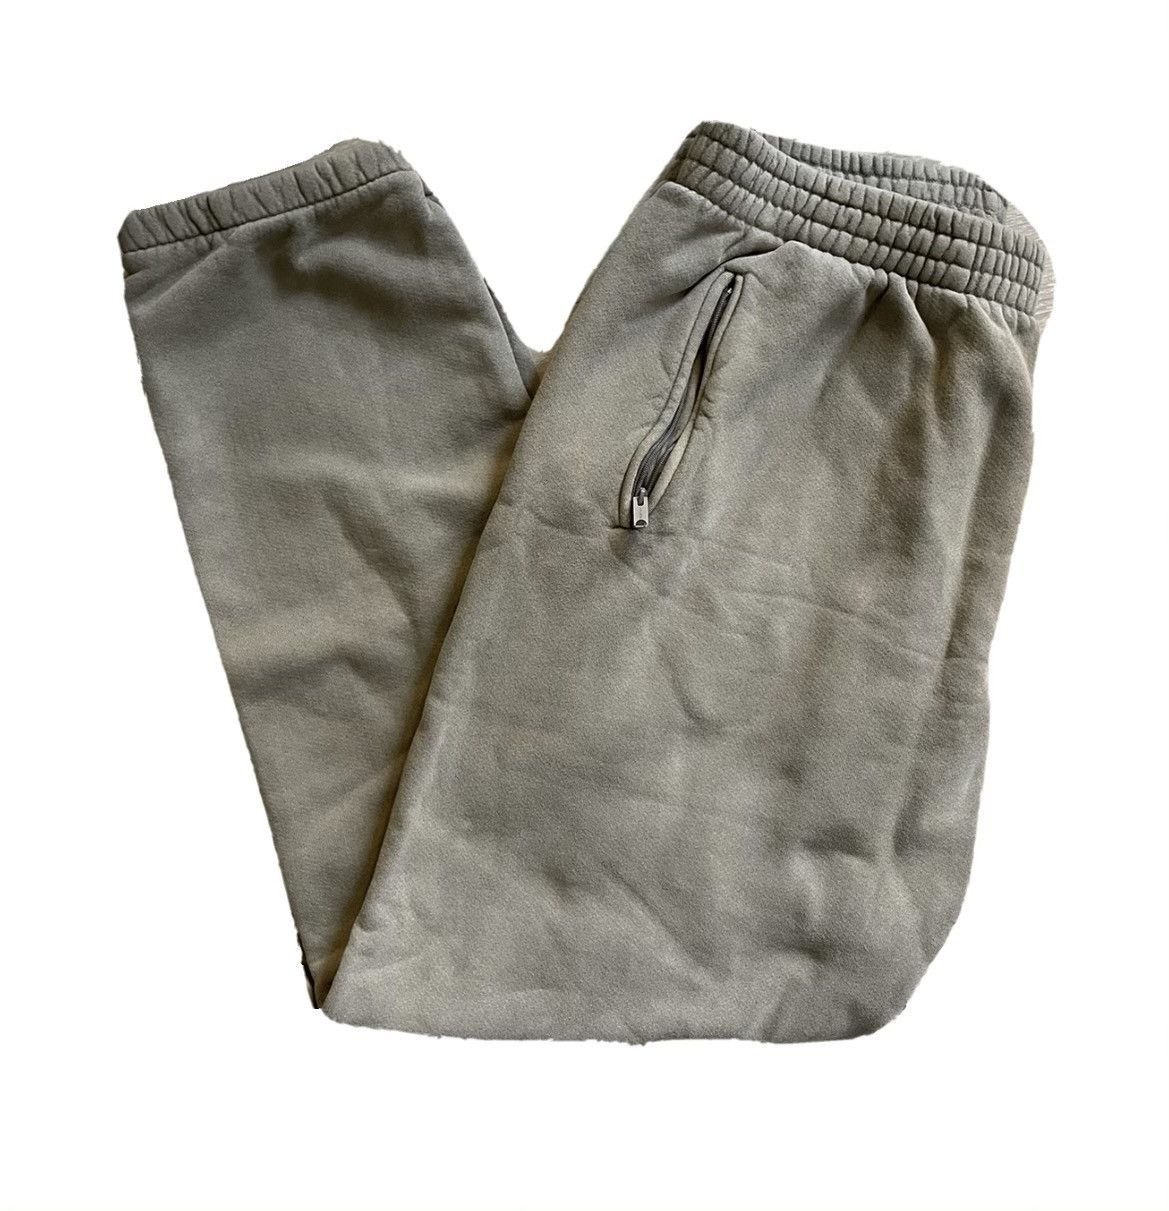 Yeezy Season Yeezy Season 6 Gravel sweatpants Size M | Grailed